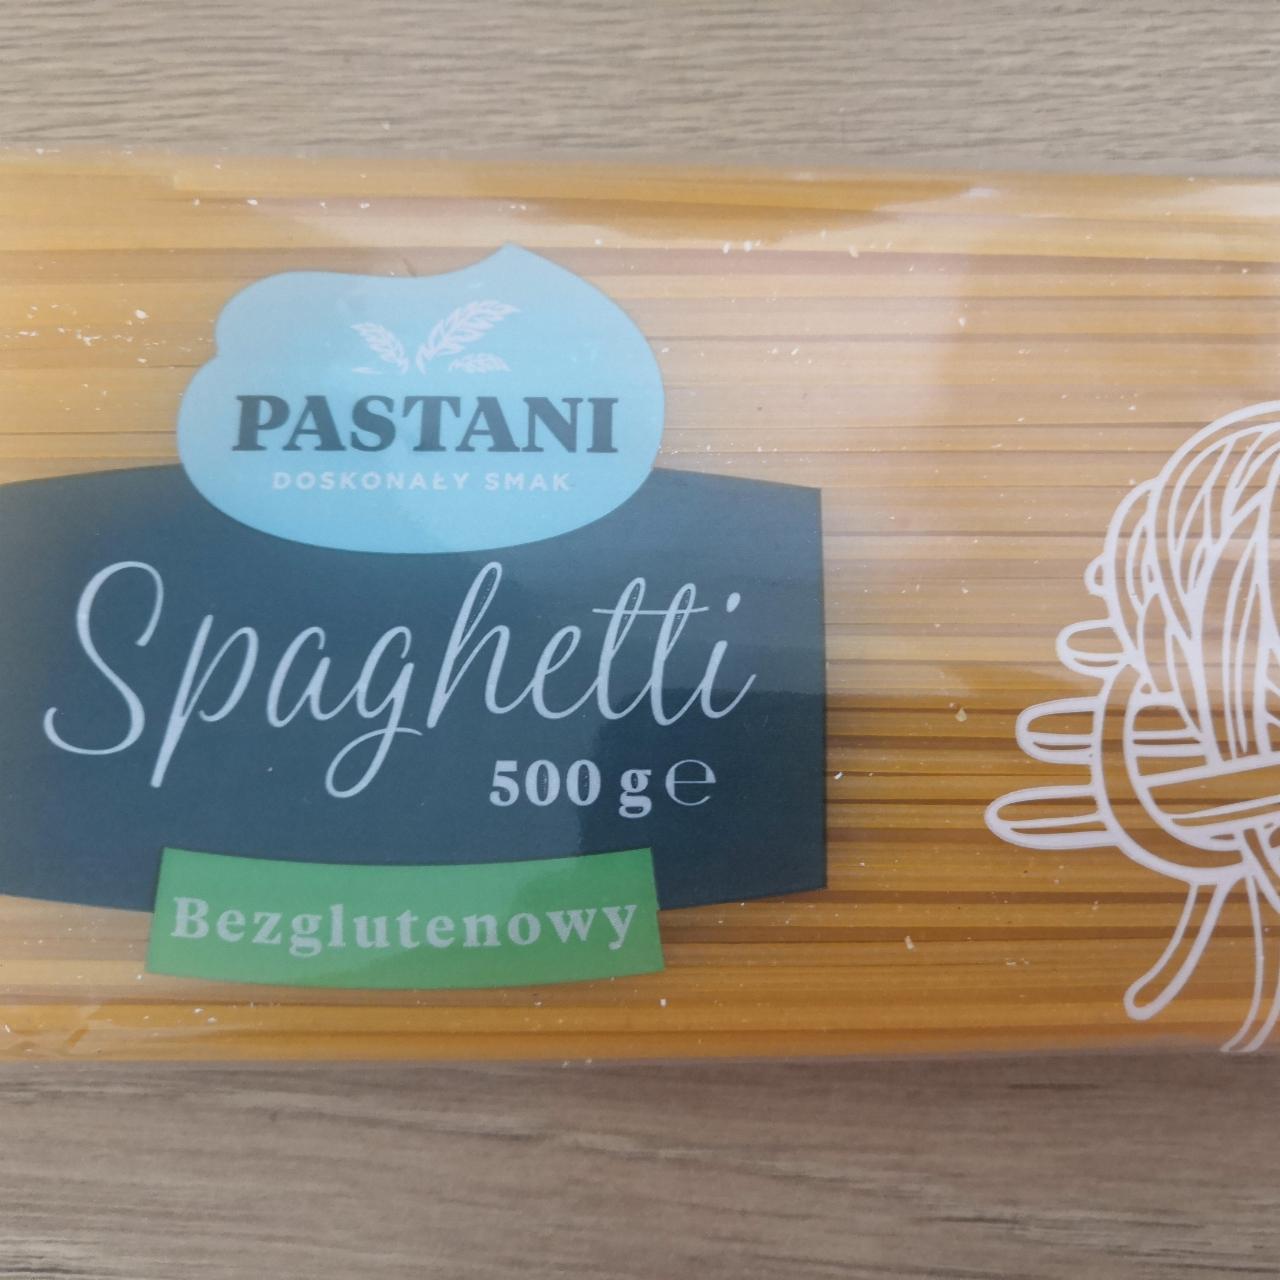 Fotografie - Spaghetti Bezglutenowy Pastani